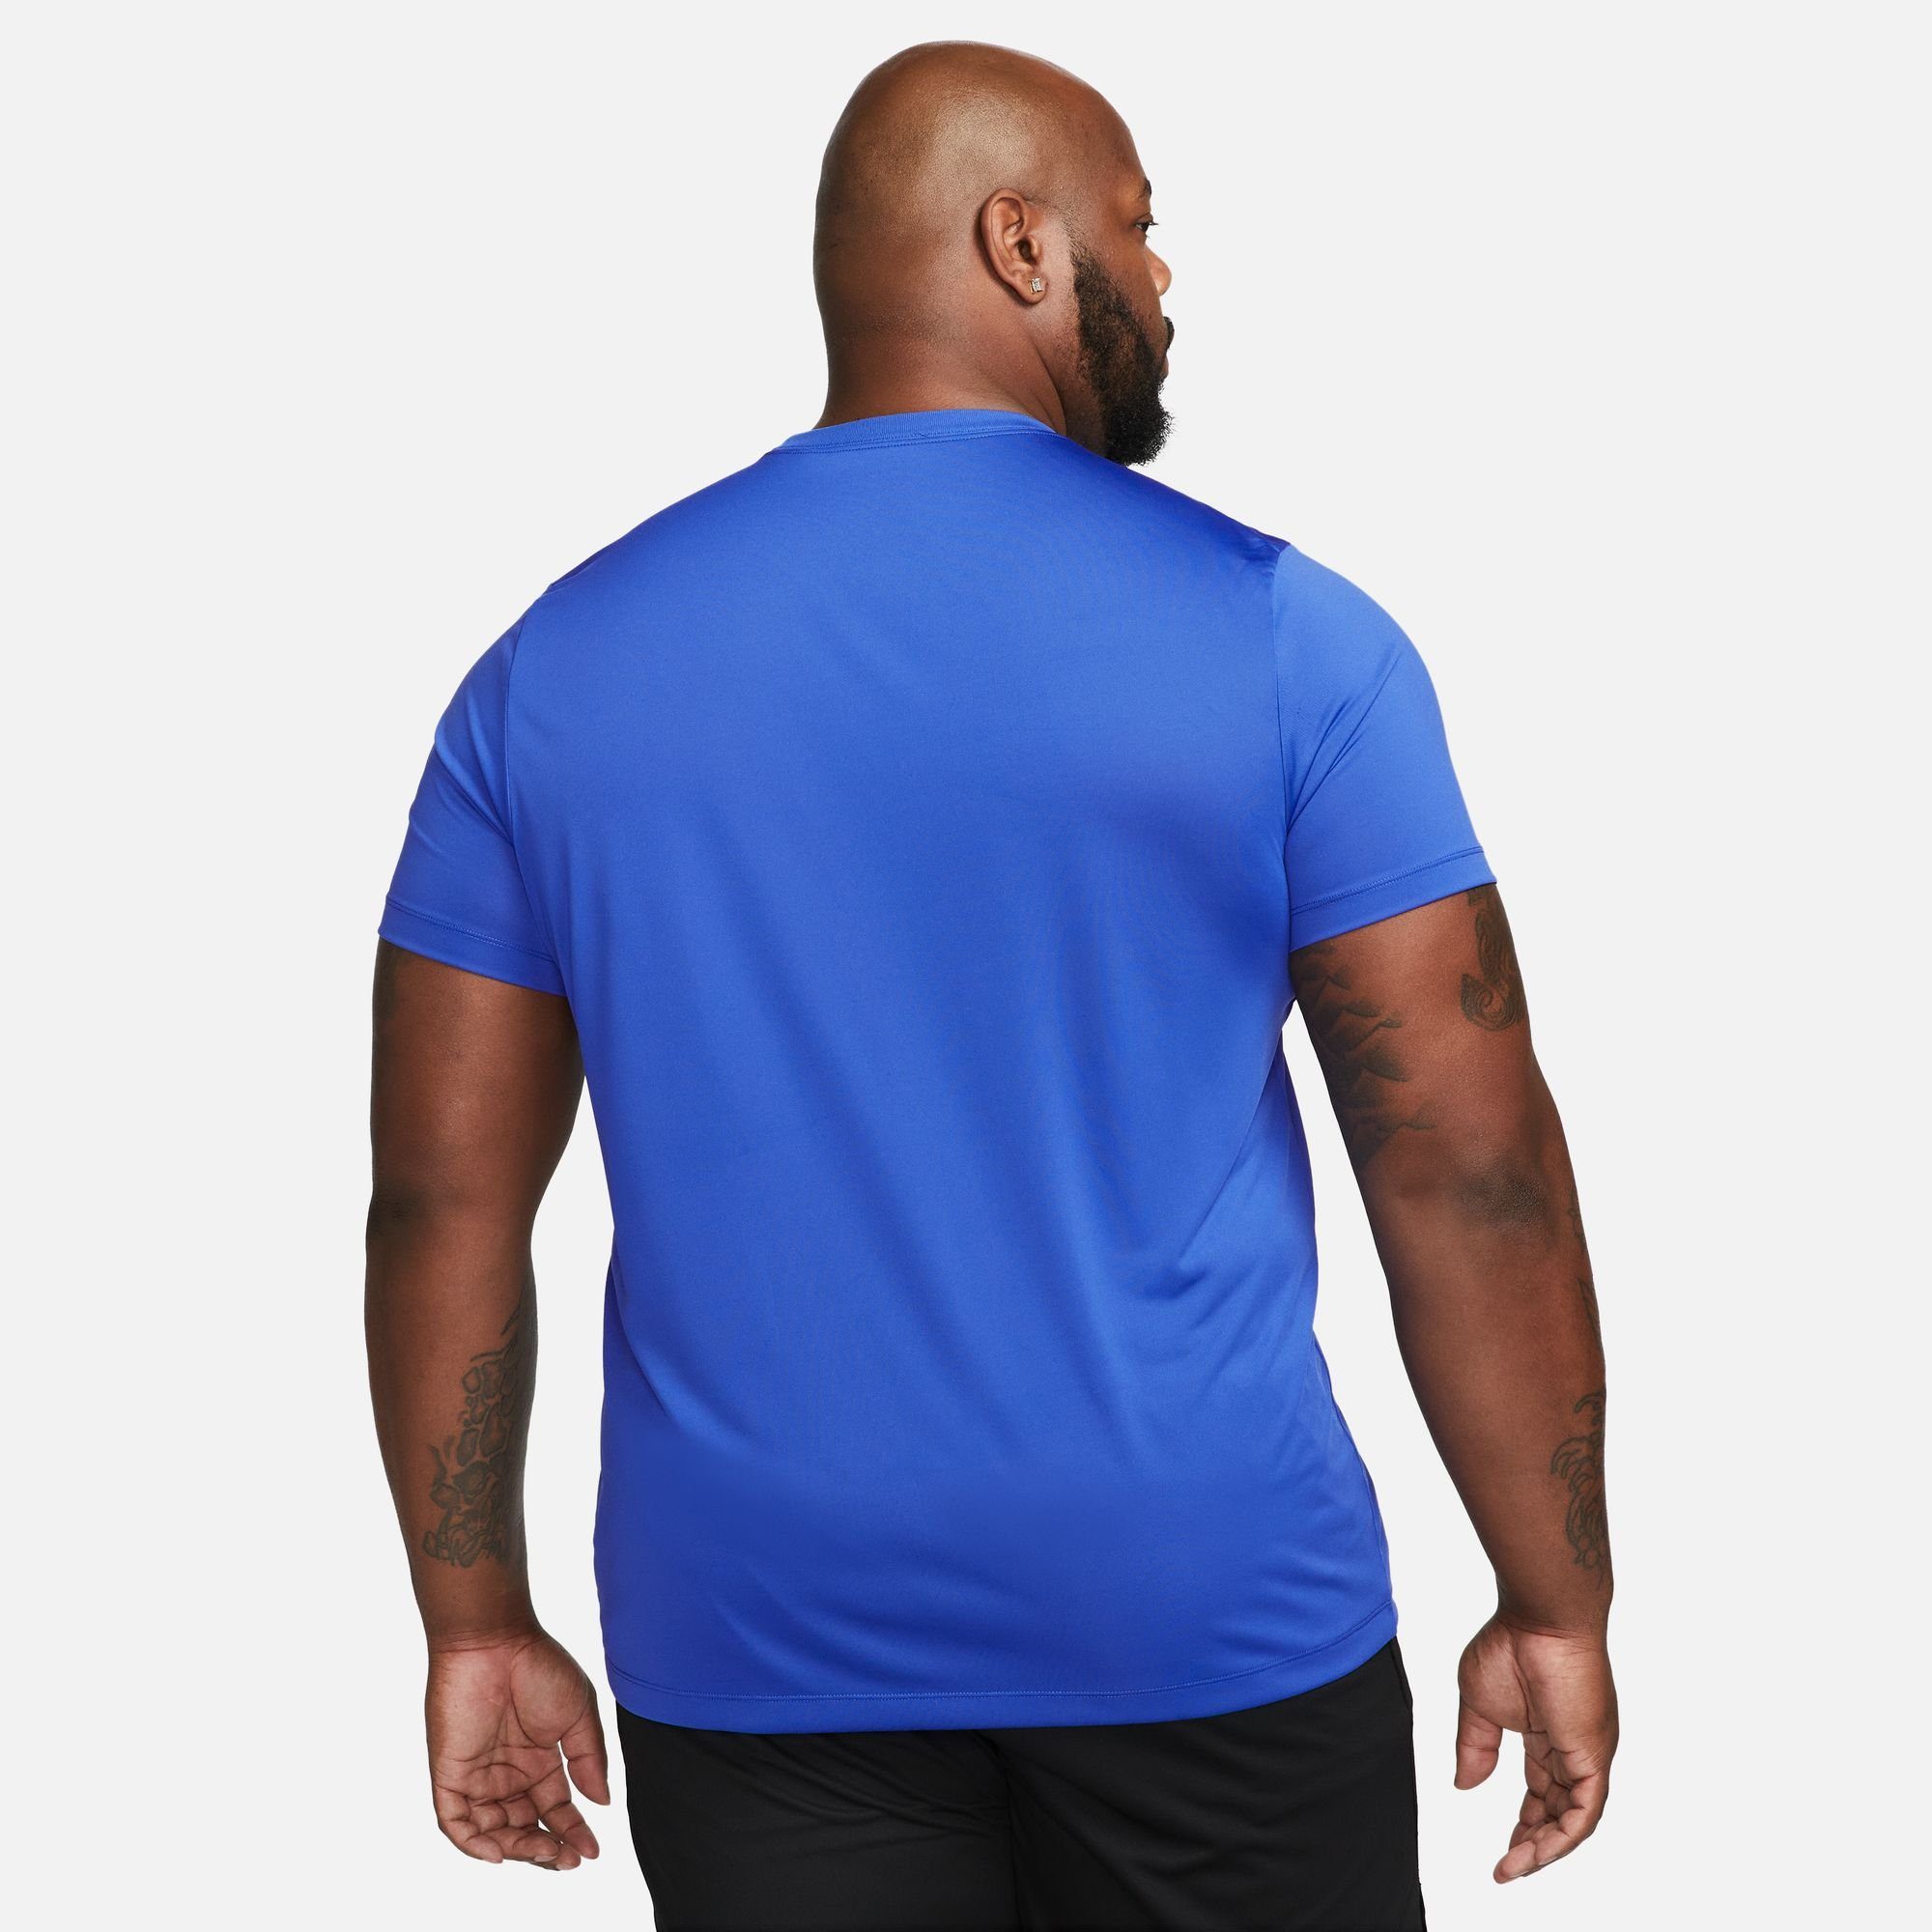 FITNESS Trainingsshirt T-SHIRT LEGEND blau Nike DRI-FIT MEN'S